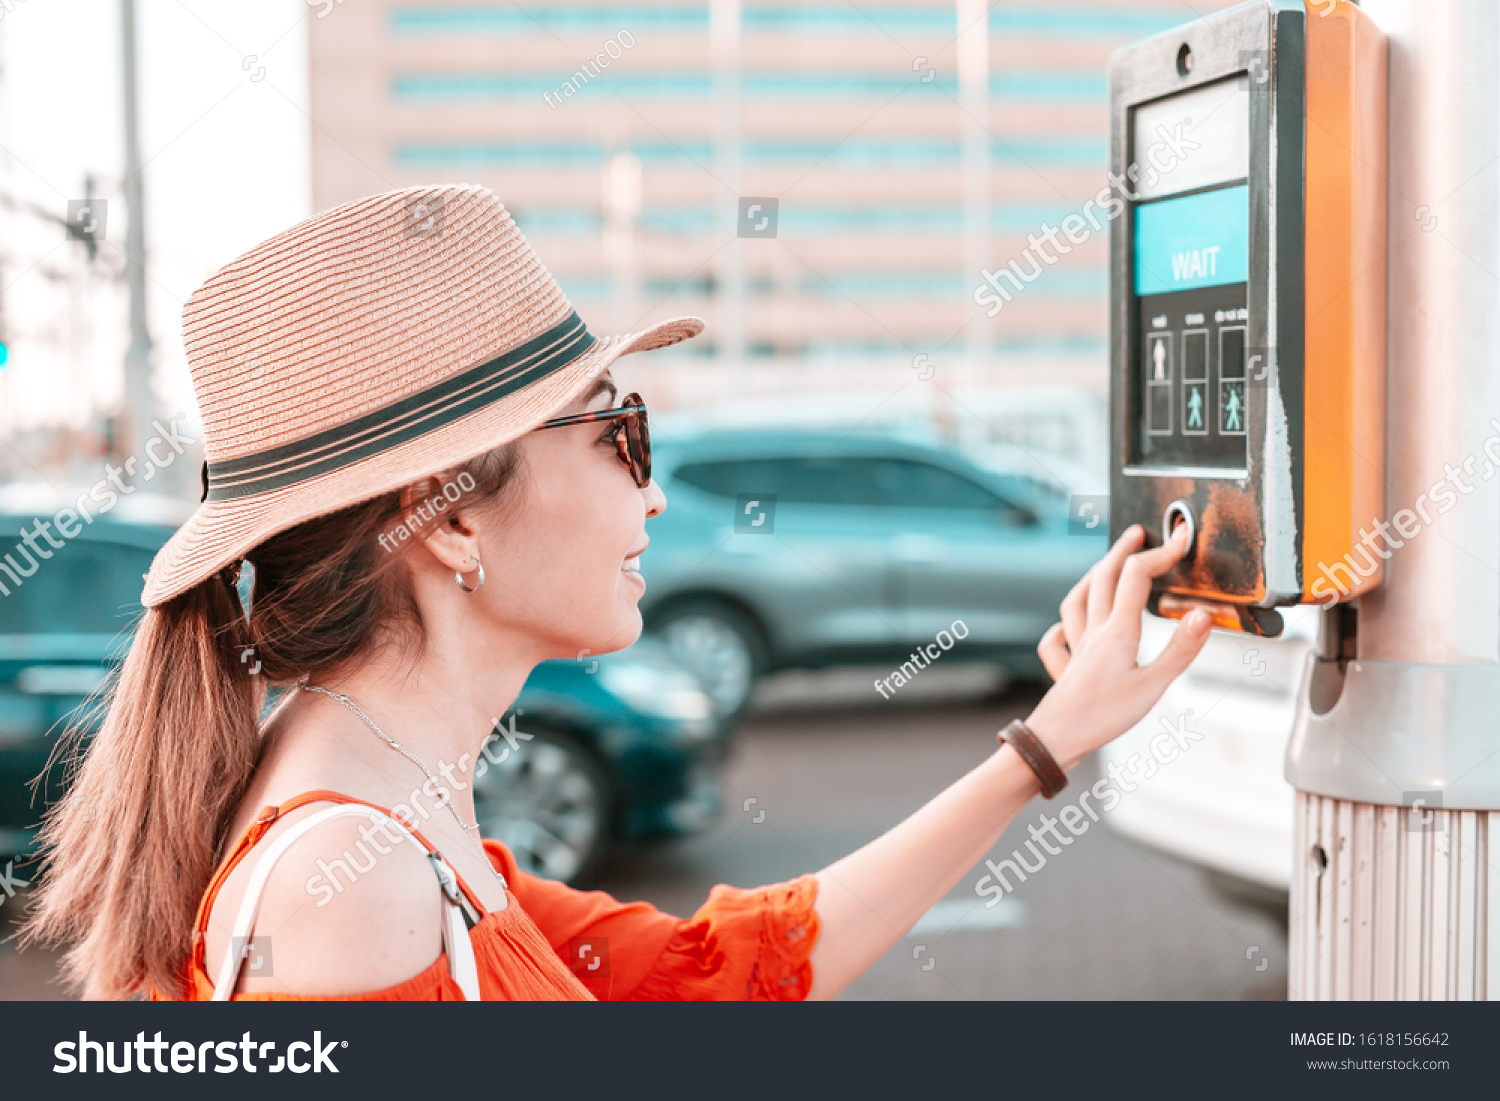 A girl presses a button to cross an adjustable pedestrian crossing on a busy street. Urban development concept #1618156642